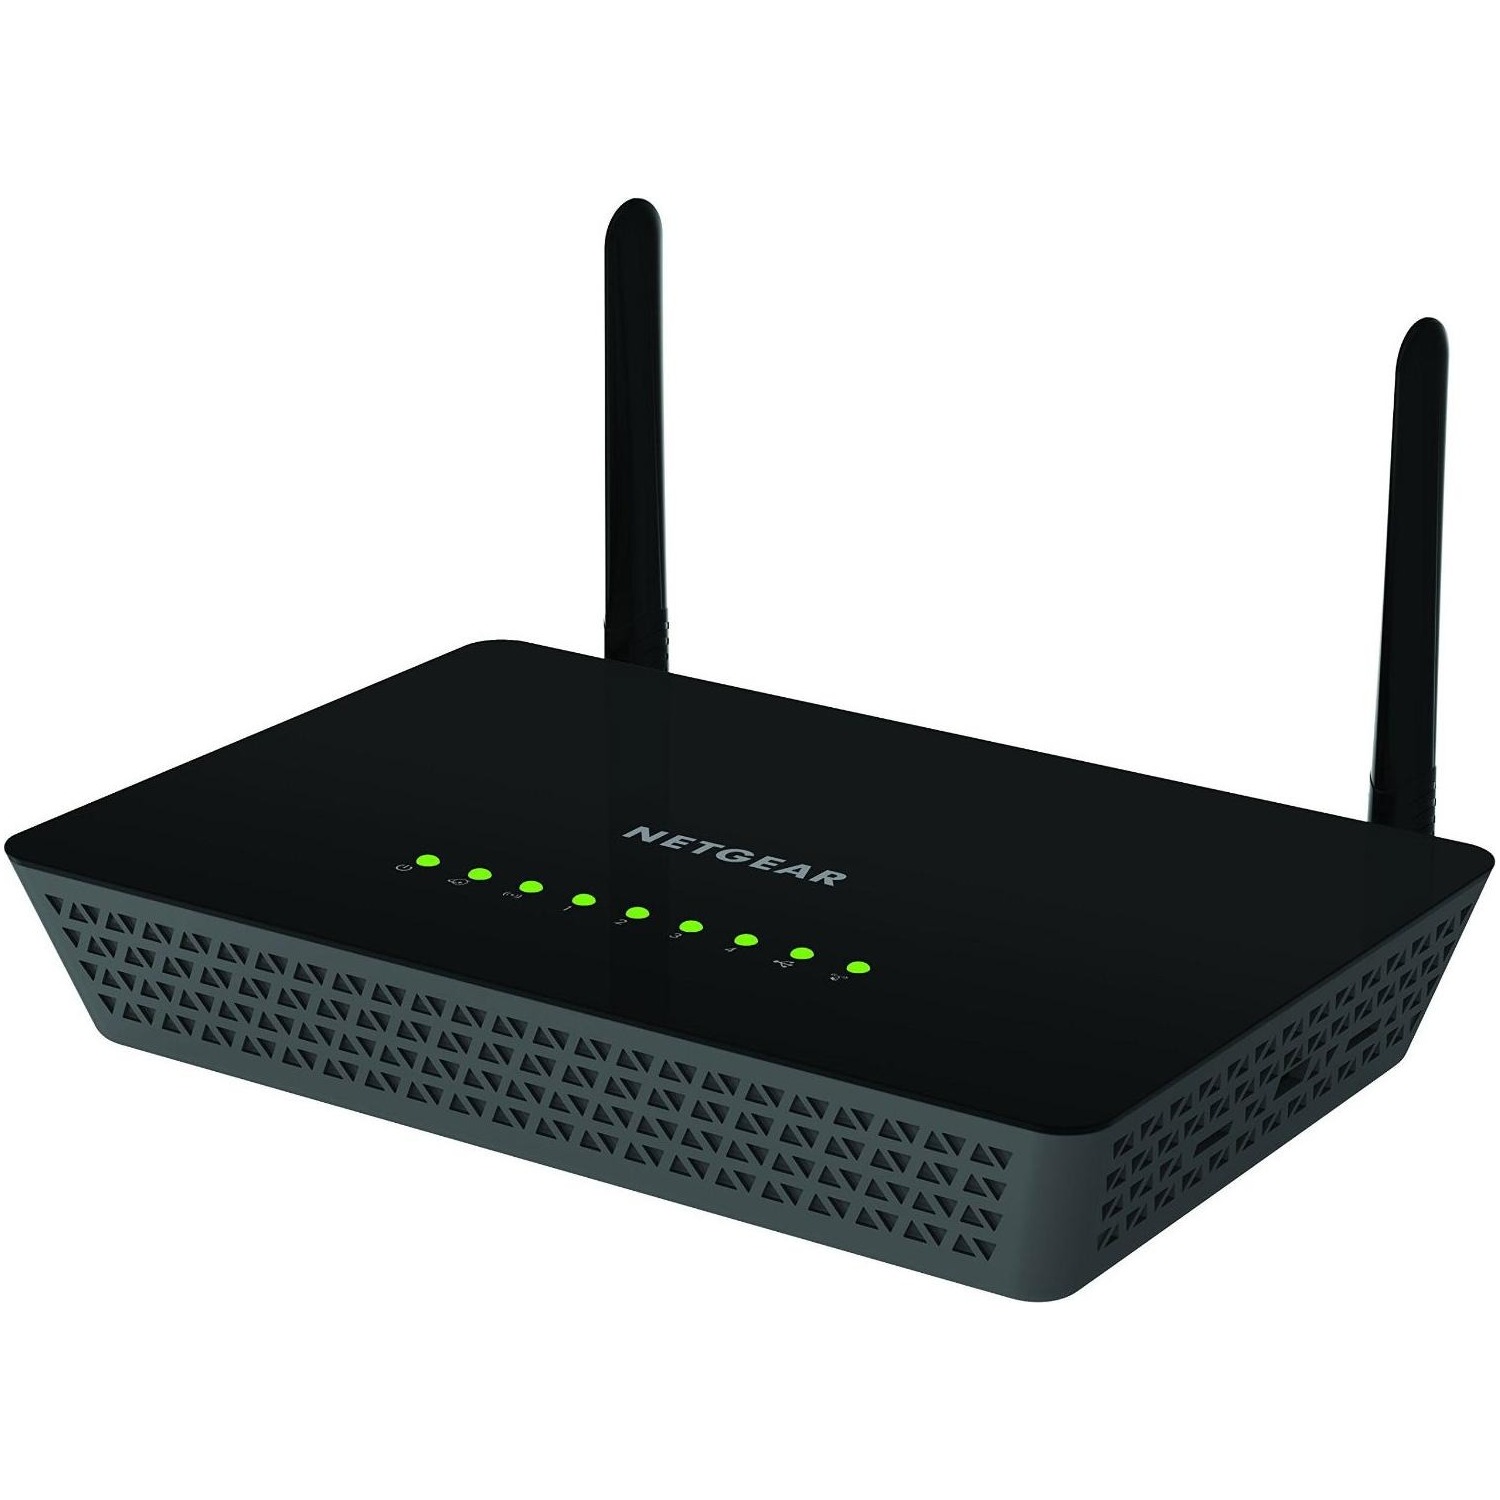 Immagine per Router Netgear AC1200 5porte Gigabit wireless da DIMOStore